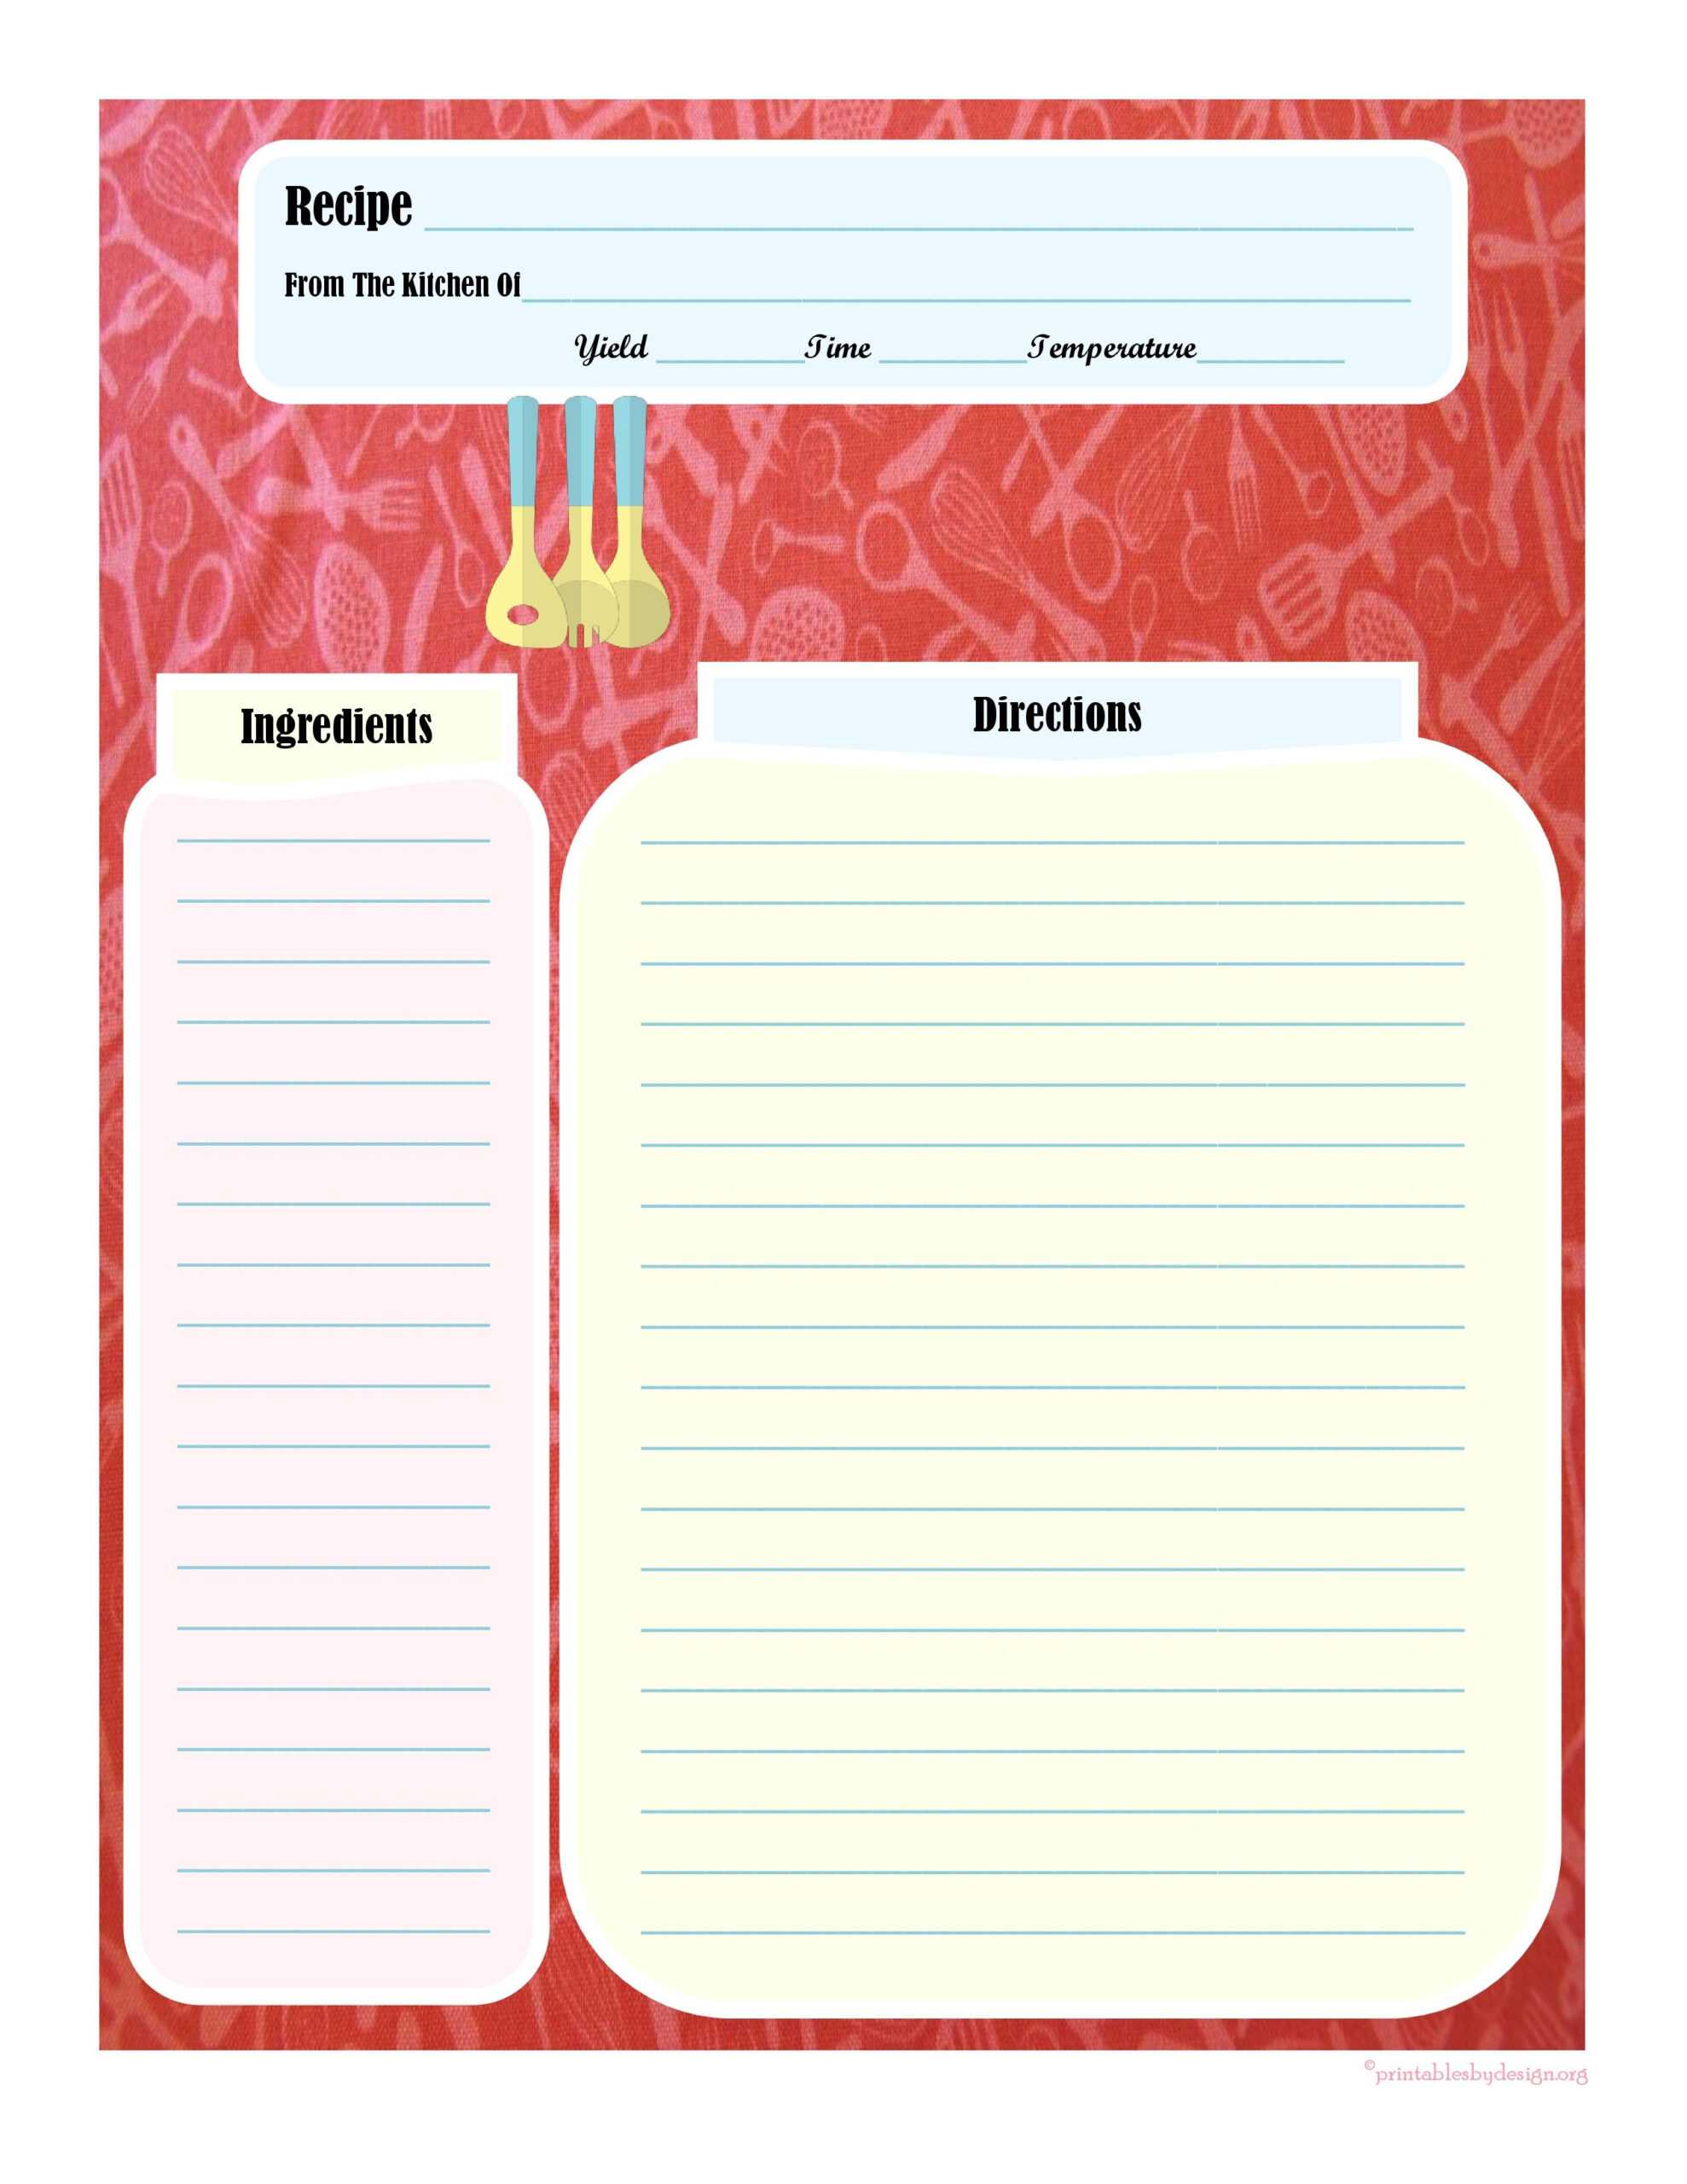 Full Page Recipe Card | Printable Recipe Cards, Cookbook With Recipe Card Design Template